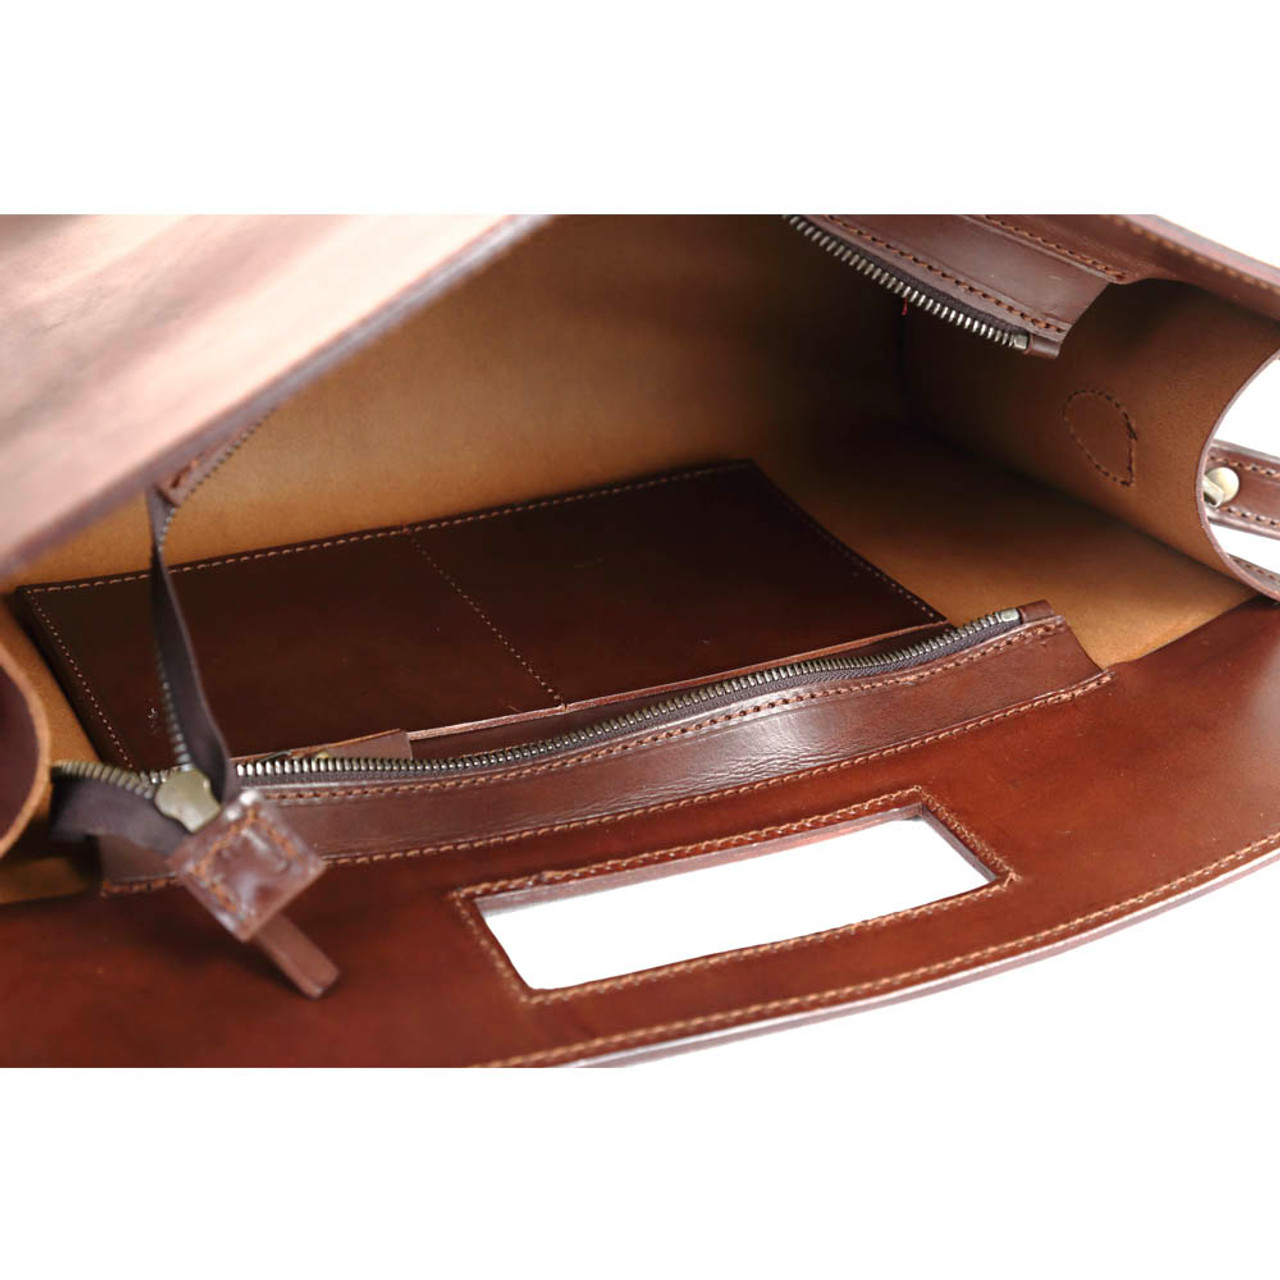 Dust Nina Italian Leather Tote Shoulder Bag